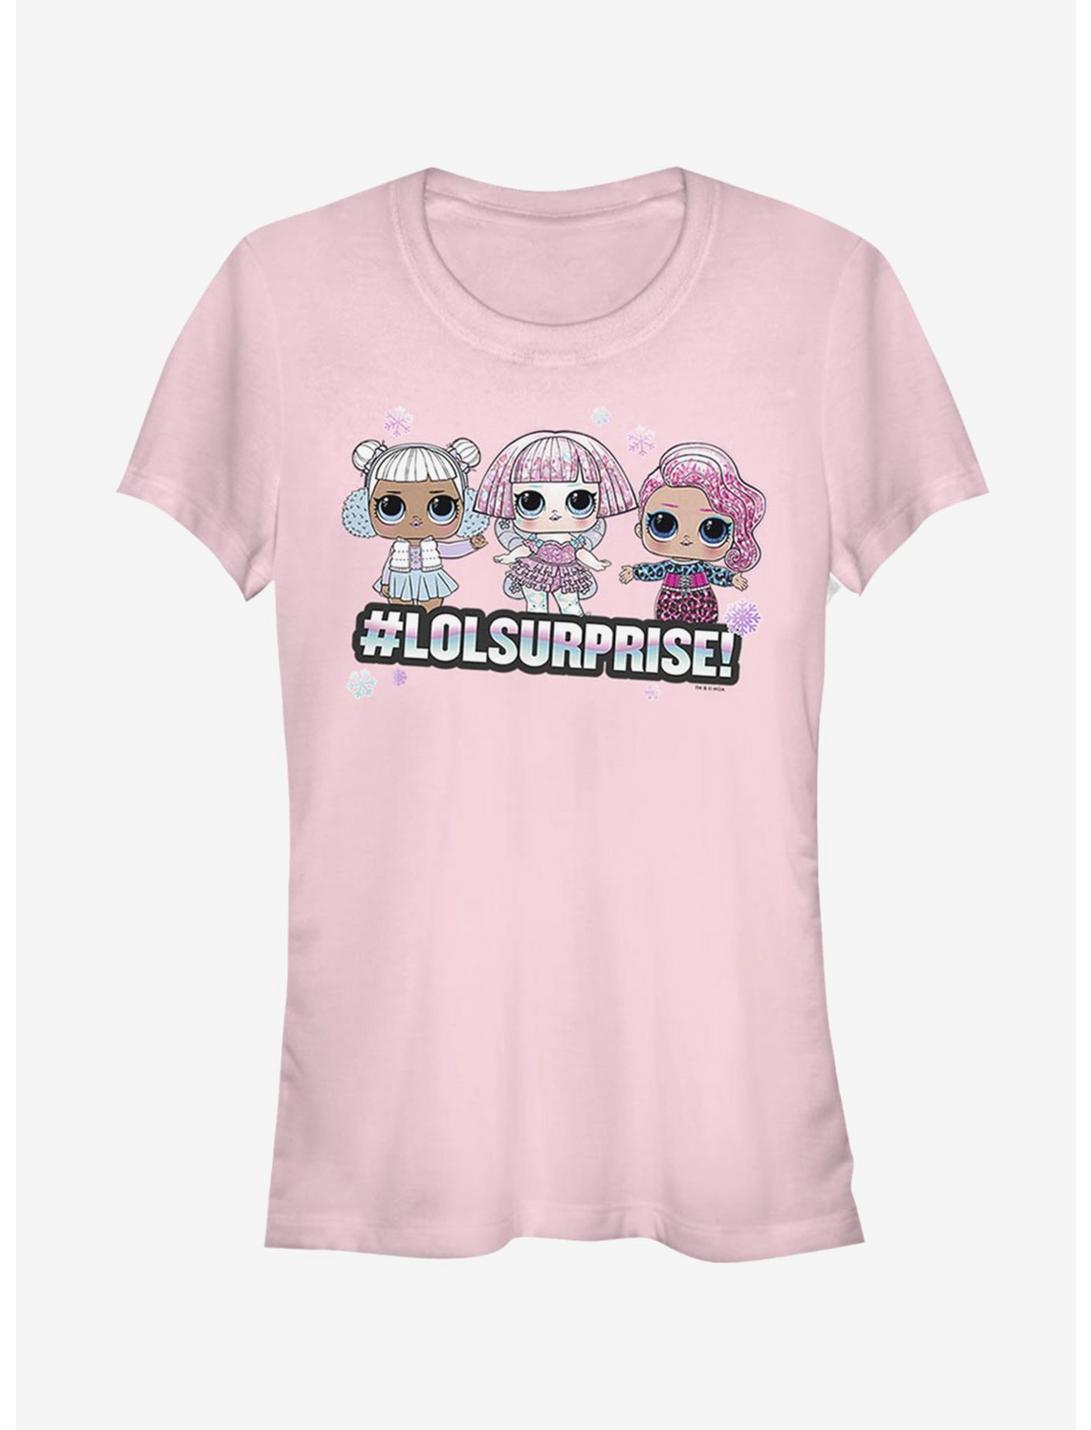 L.O.L. Surprise! Hashtag Lol Girls T-Shirt, LIGHT PINK, hi-res